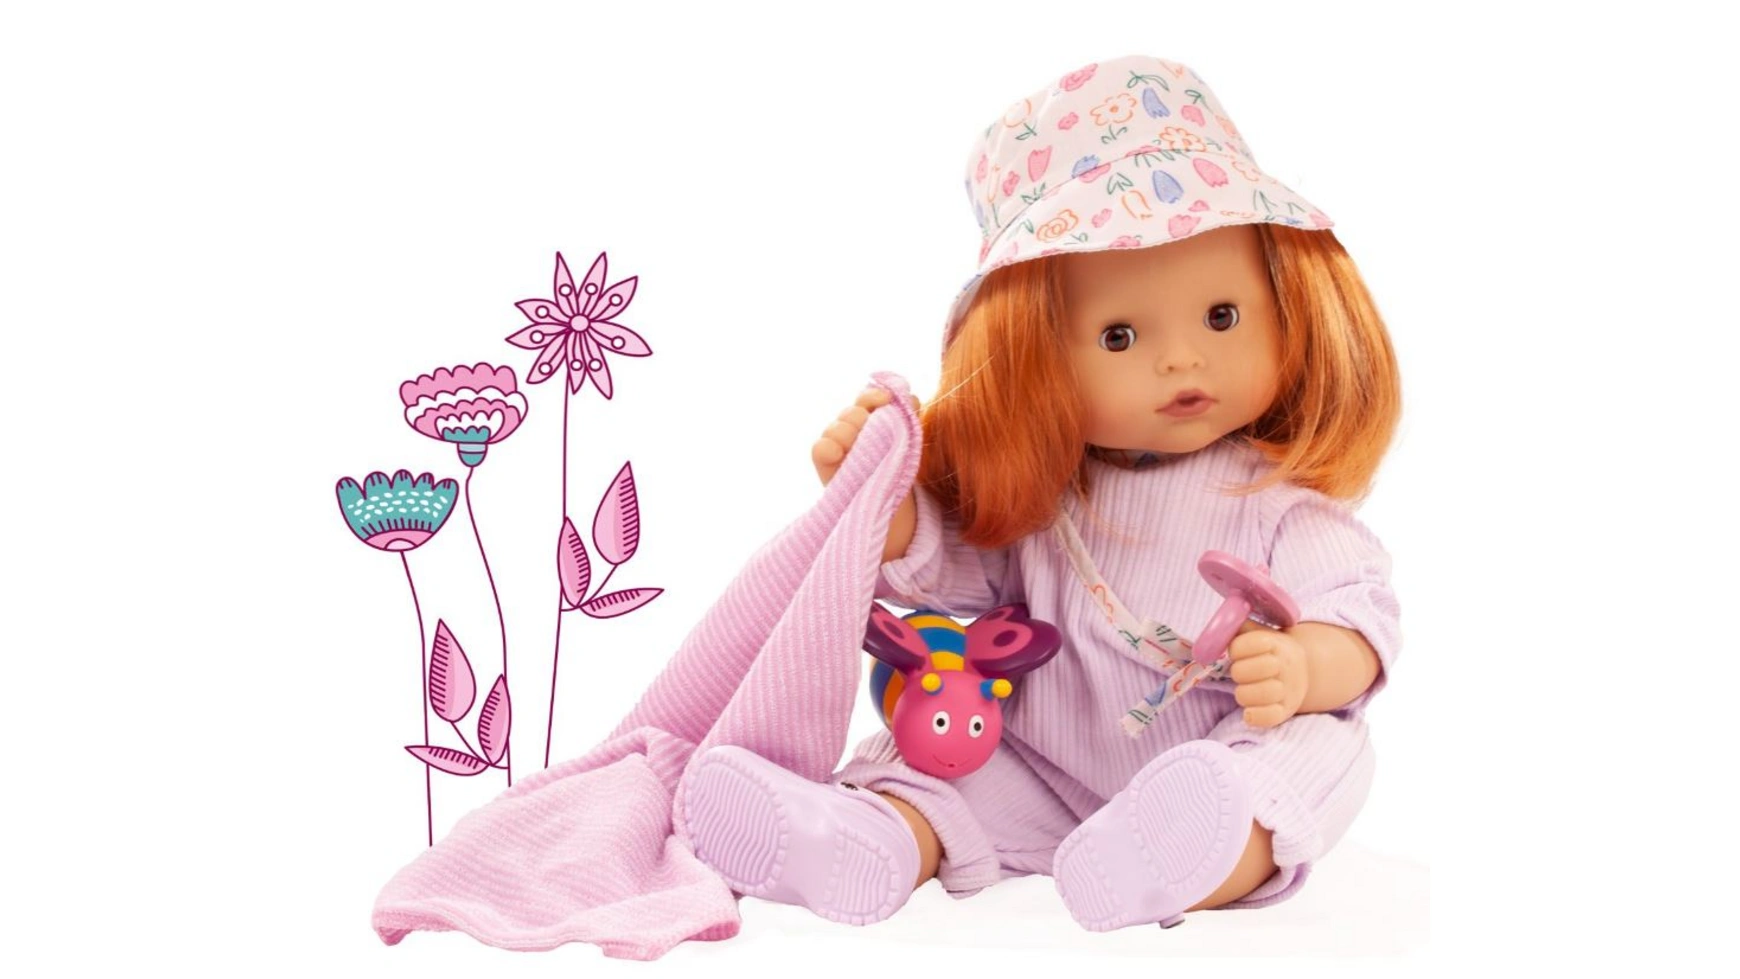 Maxy aquini bliblablume, кукла для ванны, 42 см Götz Puppenmanufaktur бумажный костюм красавица